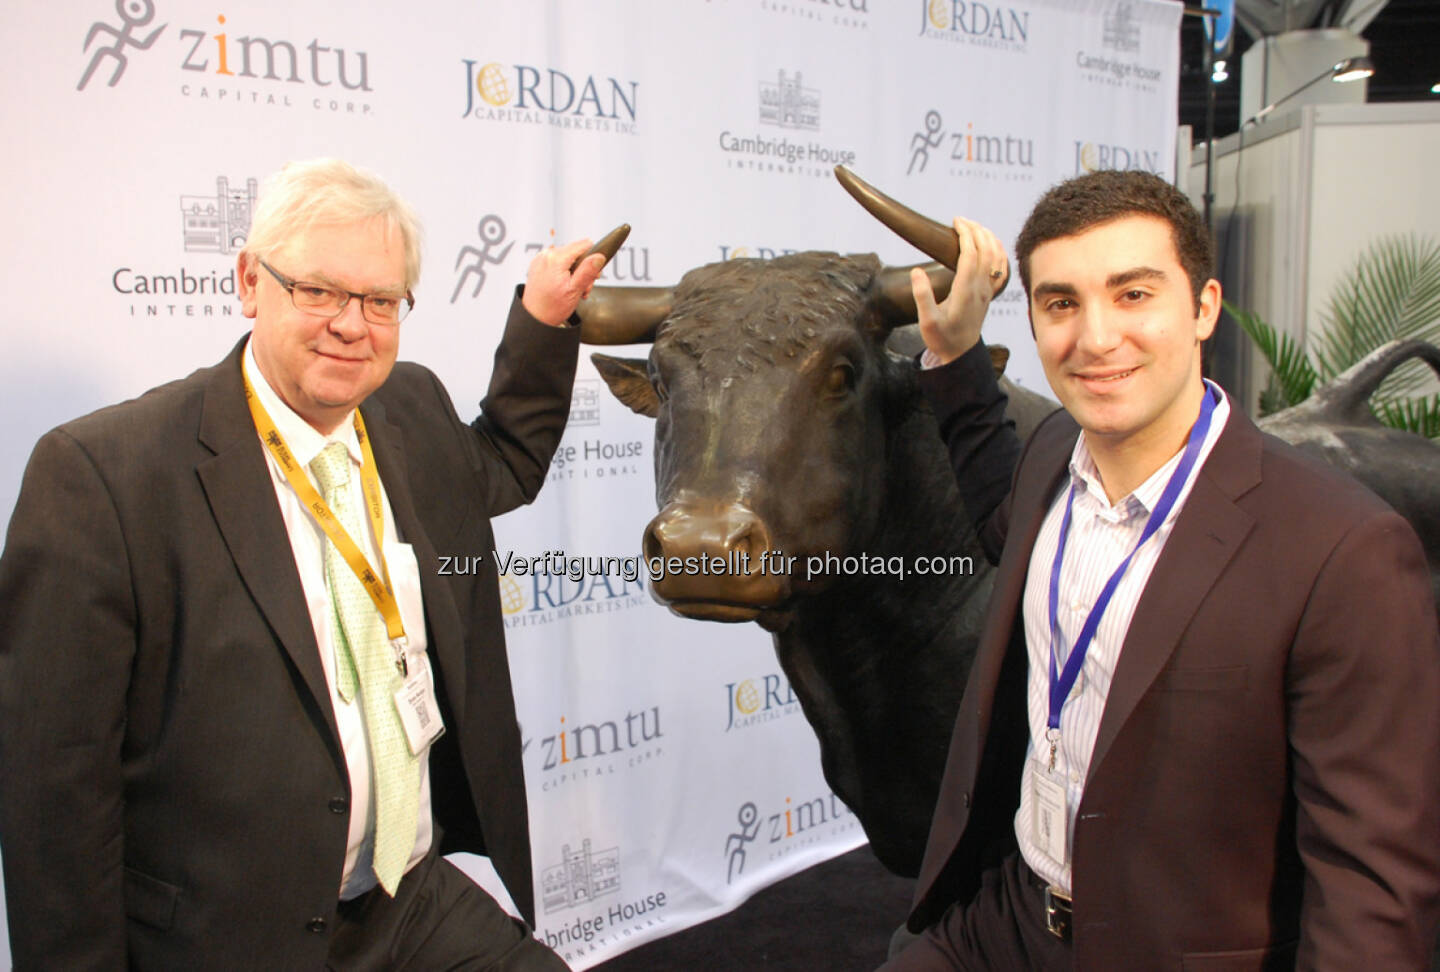 Let The Bull Run - David Hodge (Zimtu Capital) and Etienne Moshevich (AlphaStox.com)